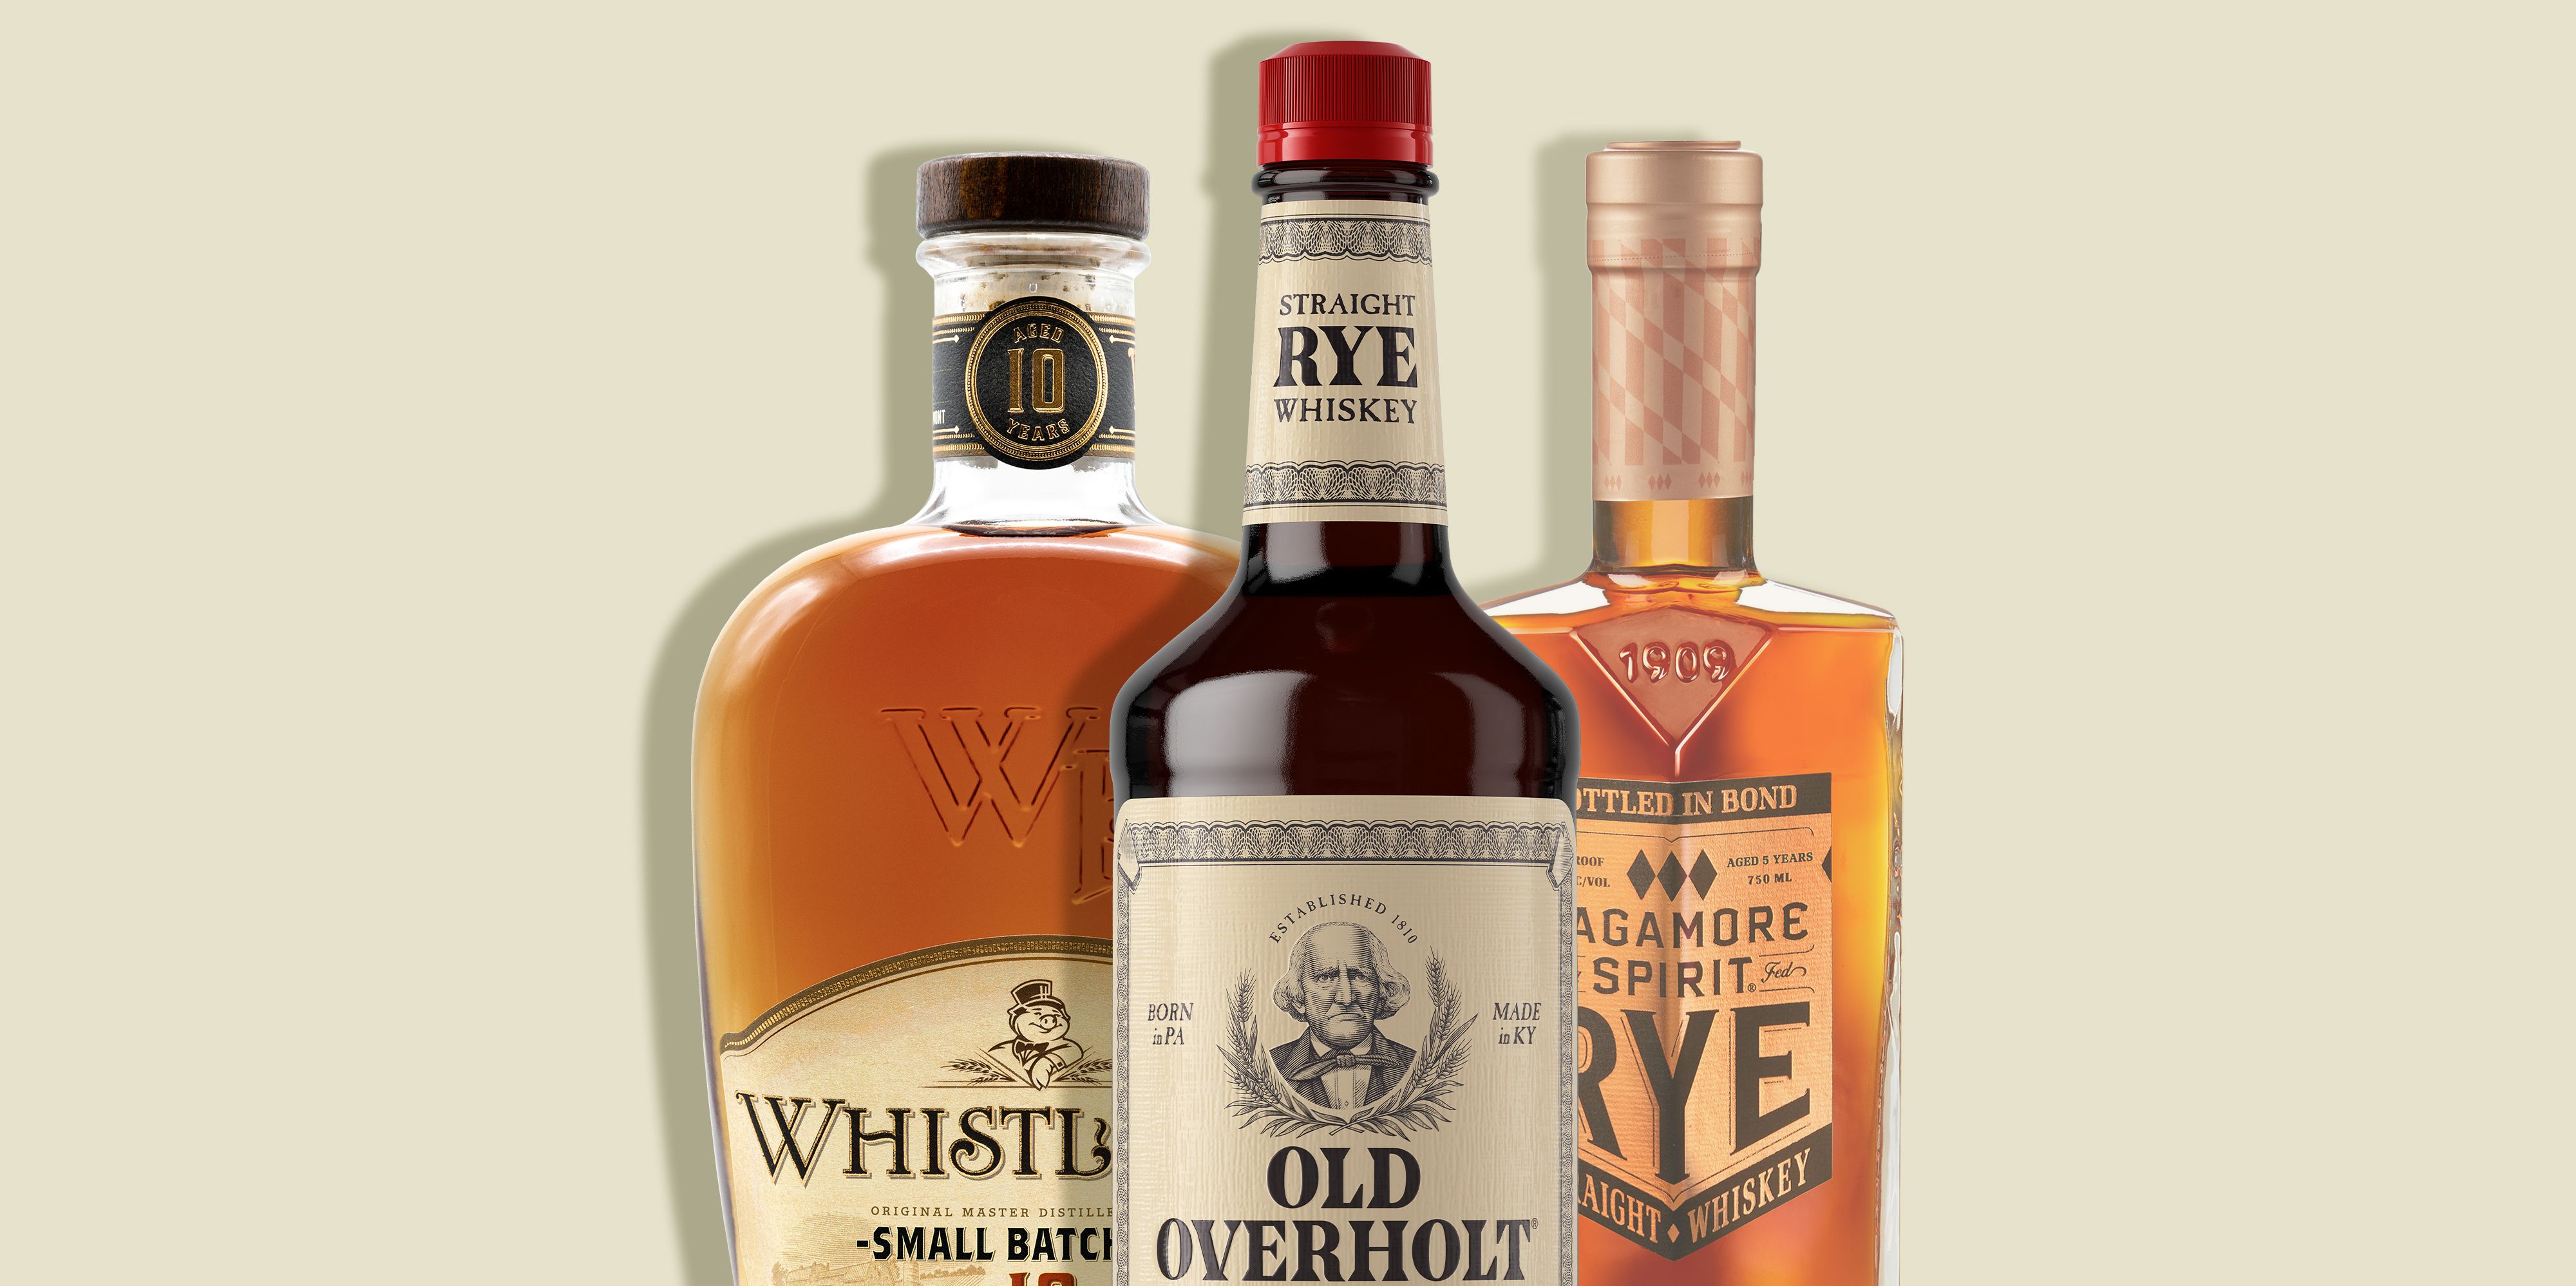 desnudo diferente tuberculosis 10 Best Rye Whiskey Brands to Drink 2022 - Top Rye Bottles to Buy